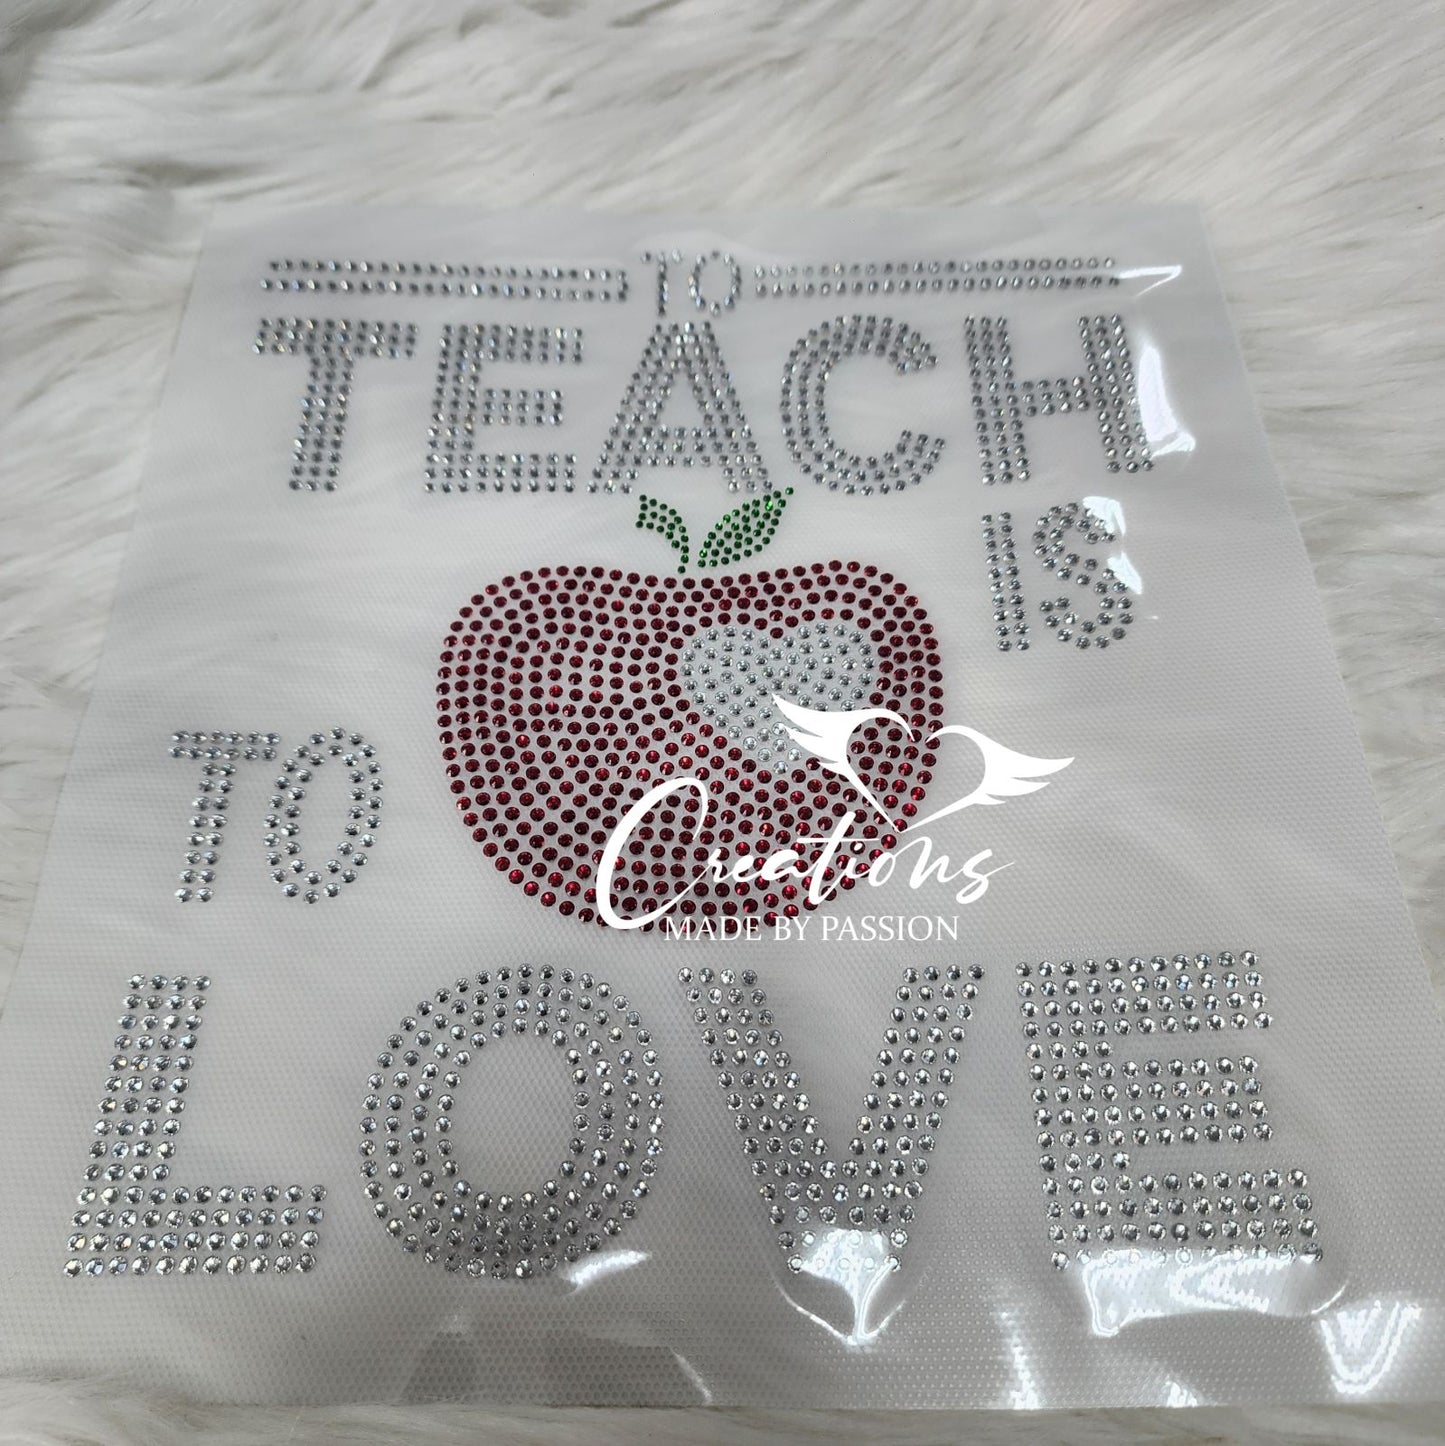 Teach Is To Love